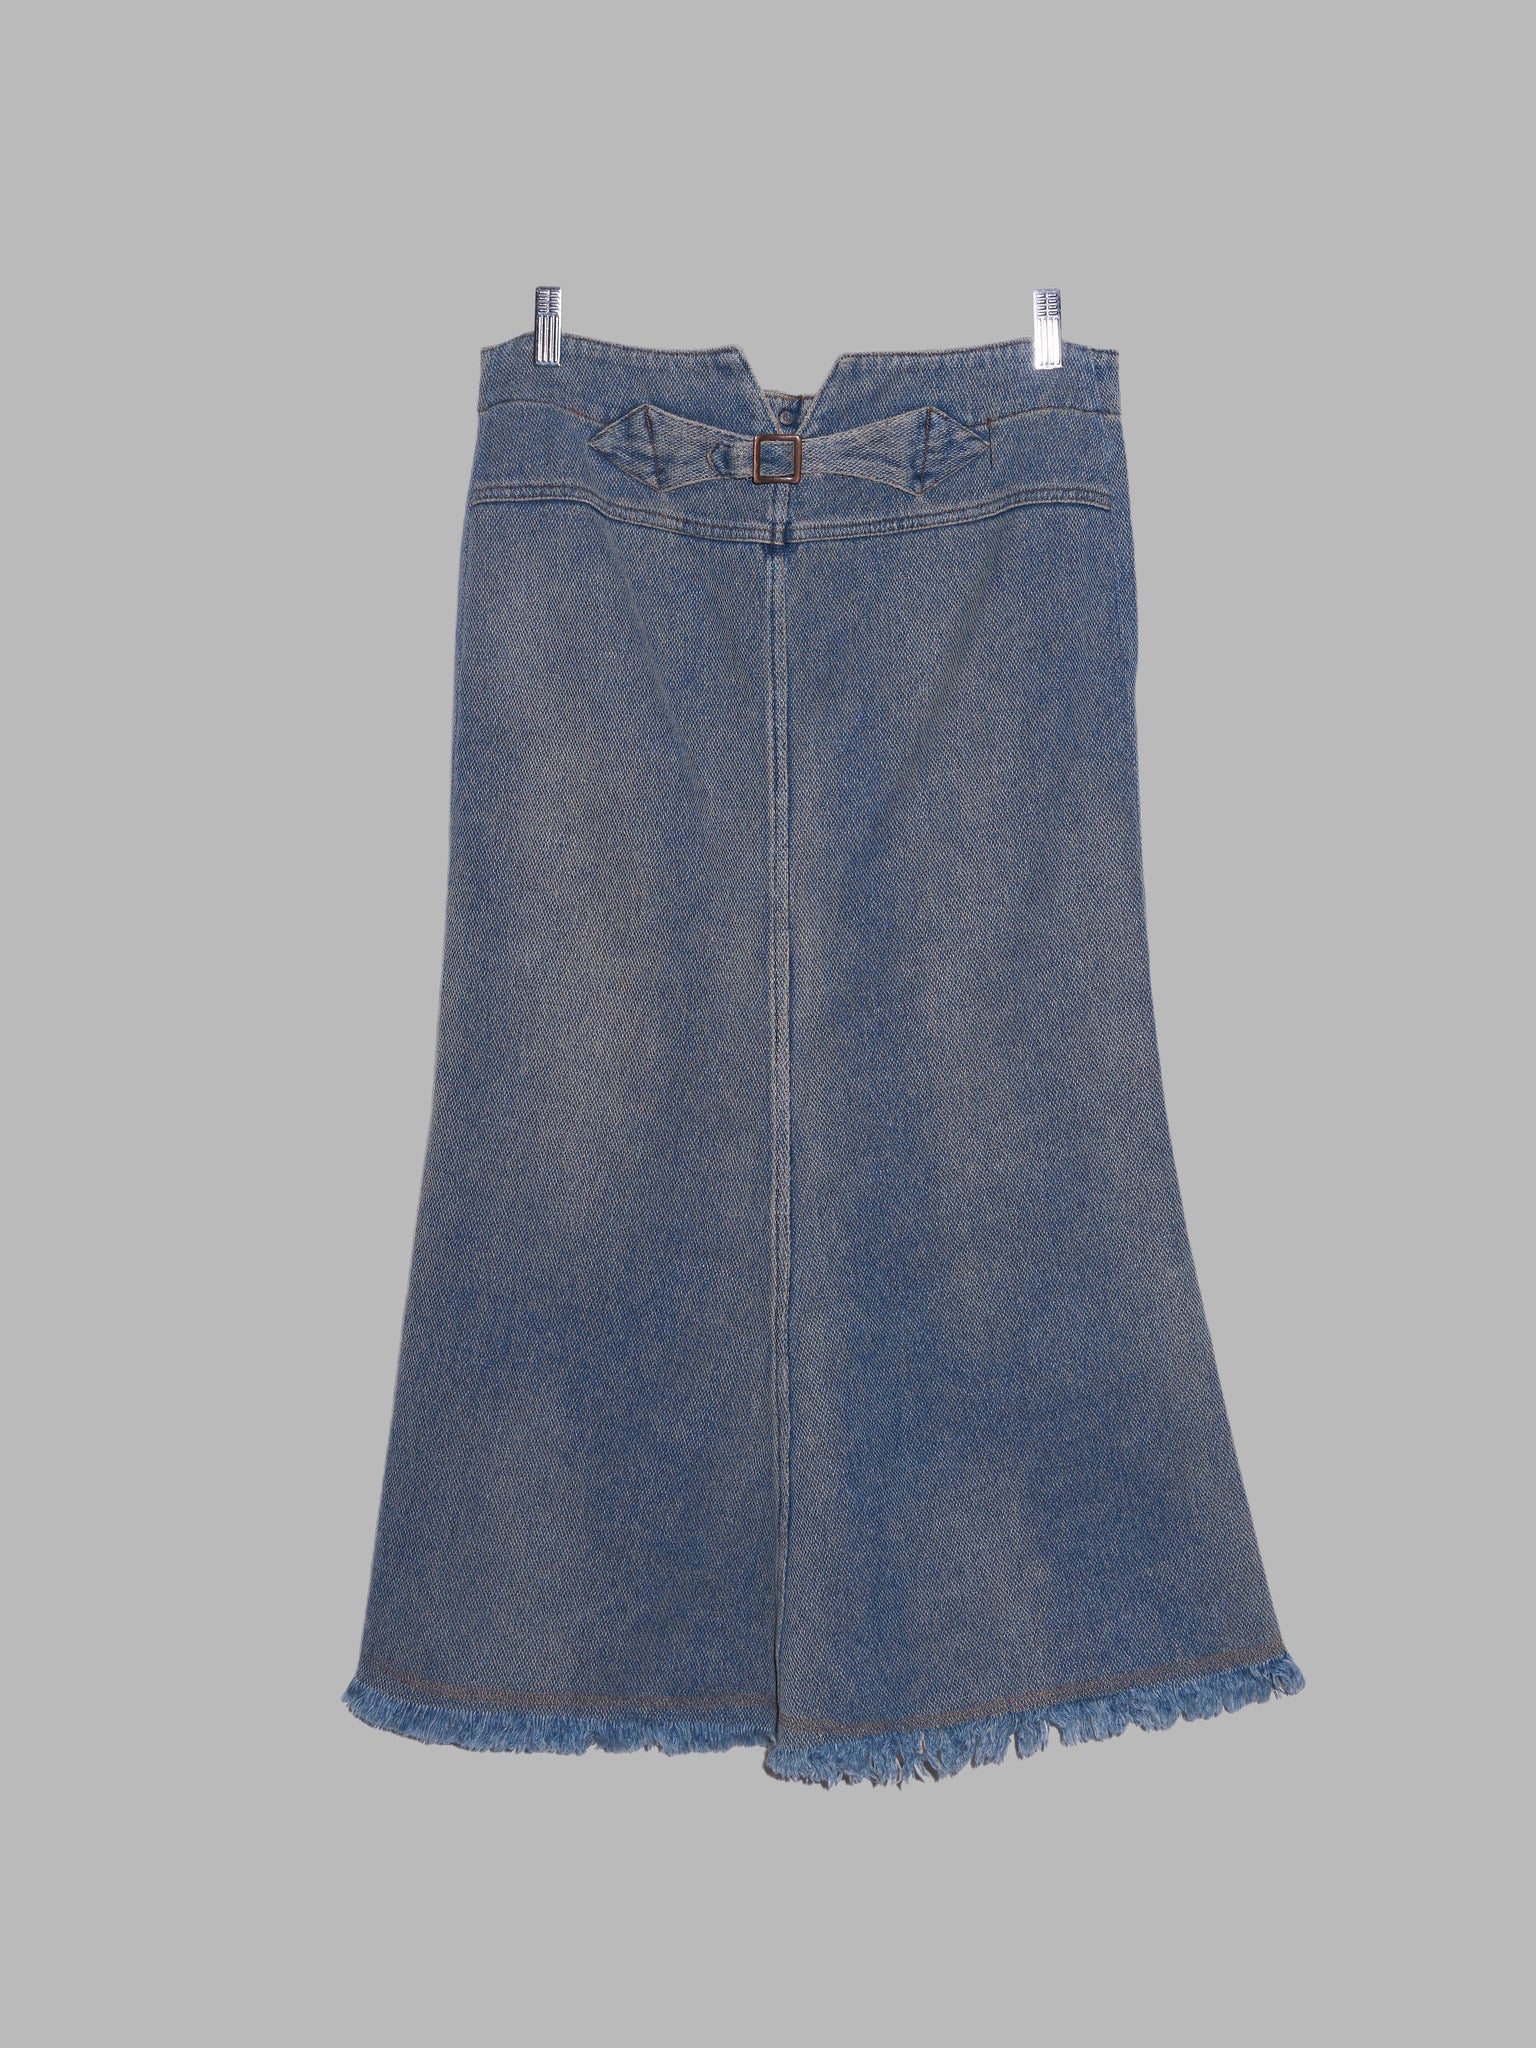 Junya Watanabe Comme des Garcons SS2002 washed cotton raw hem denim skirt - M